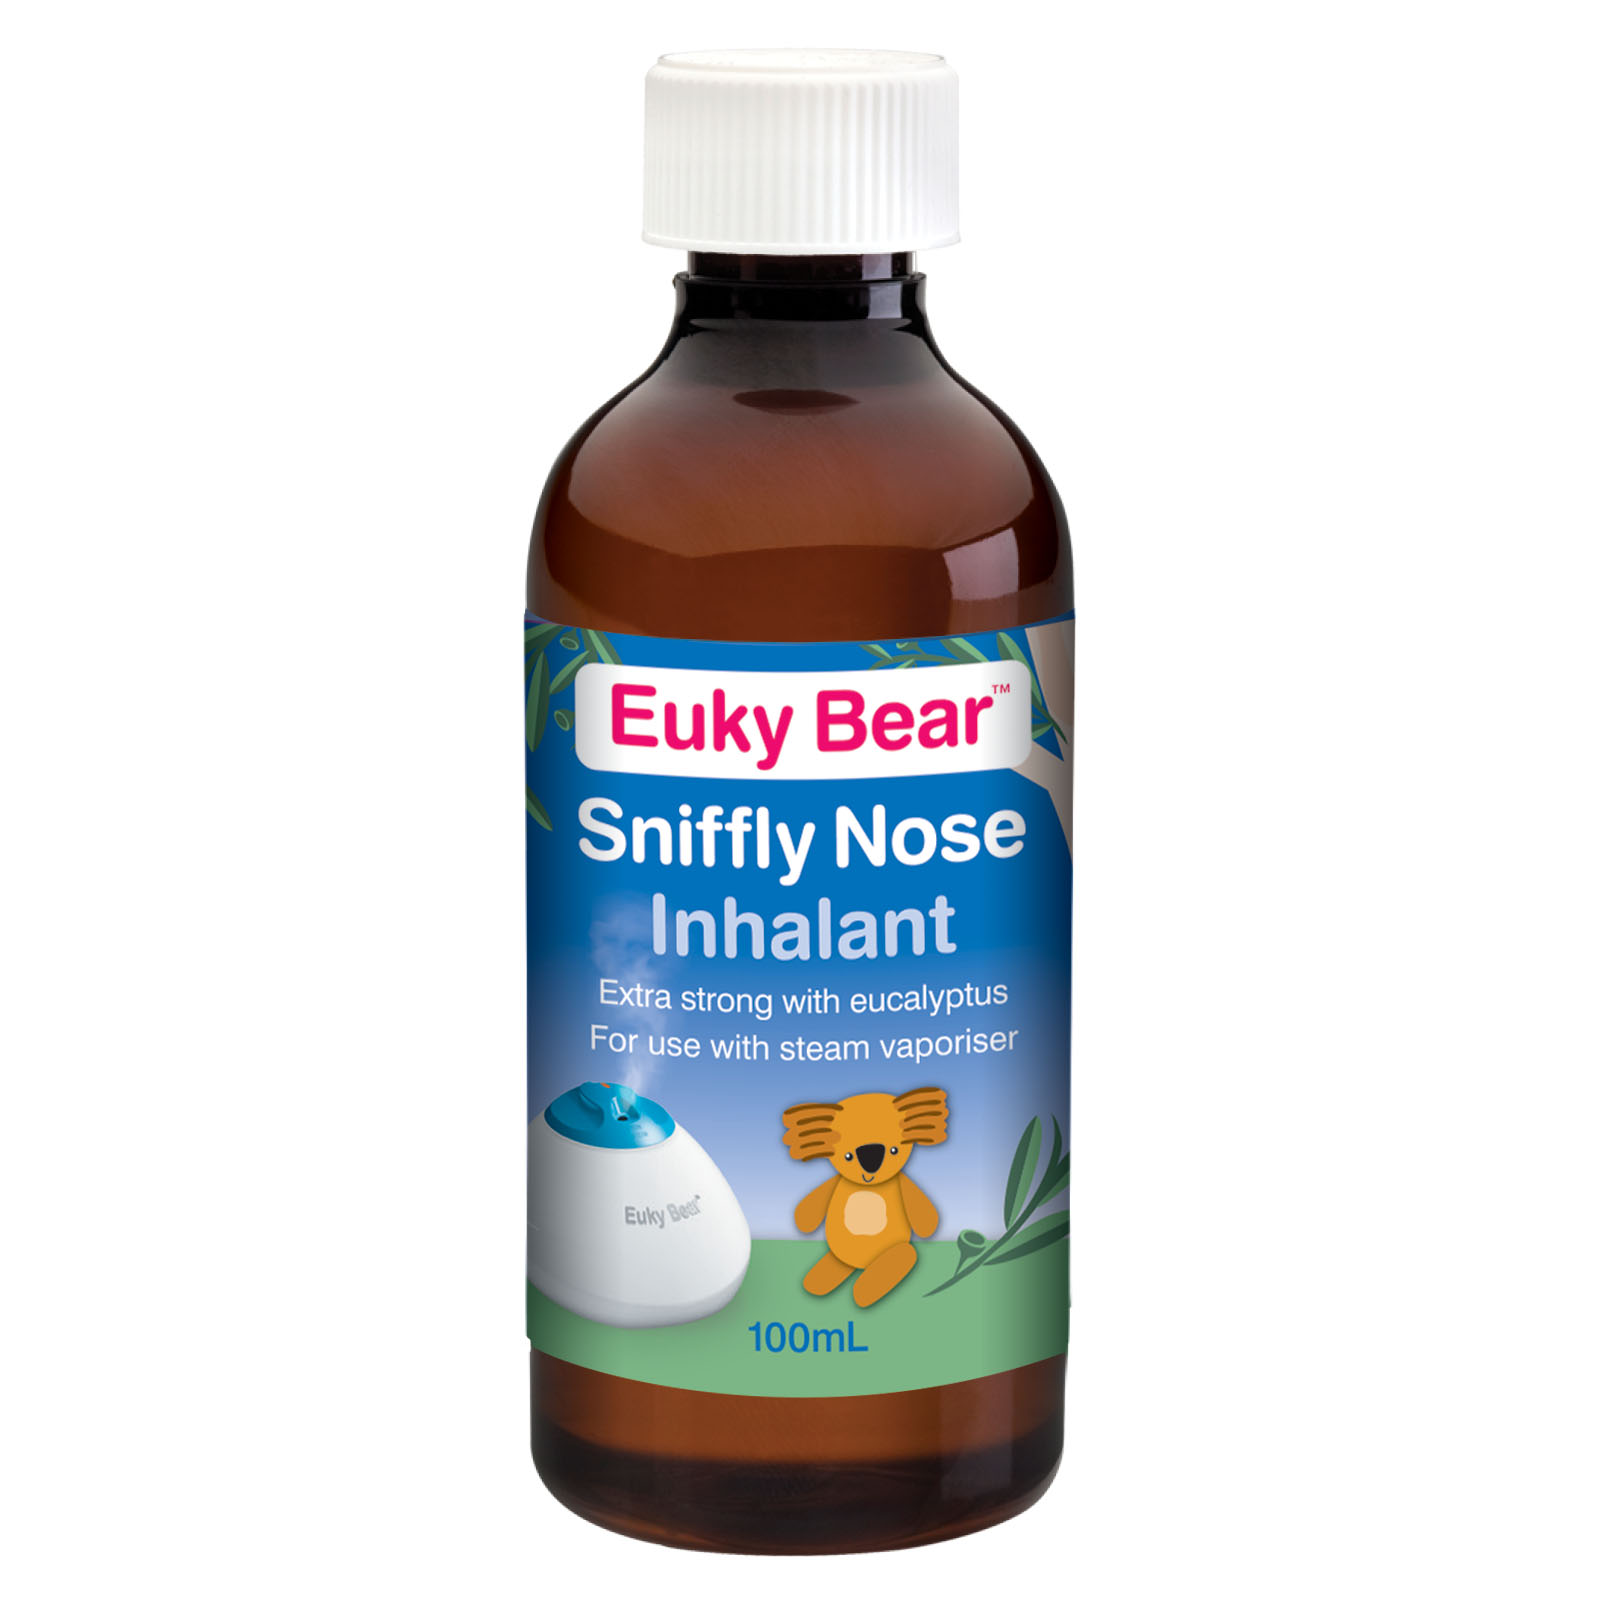 Euky Bear Sniffly Nose Inhalant (100ml)